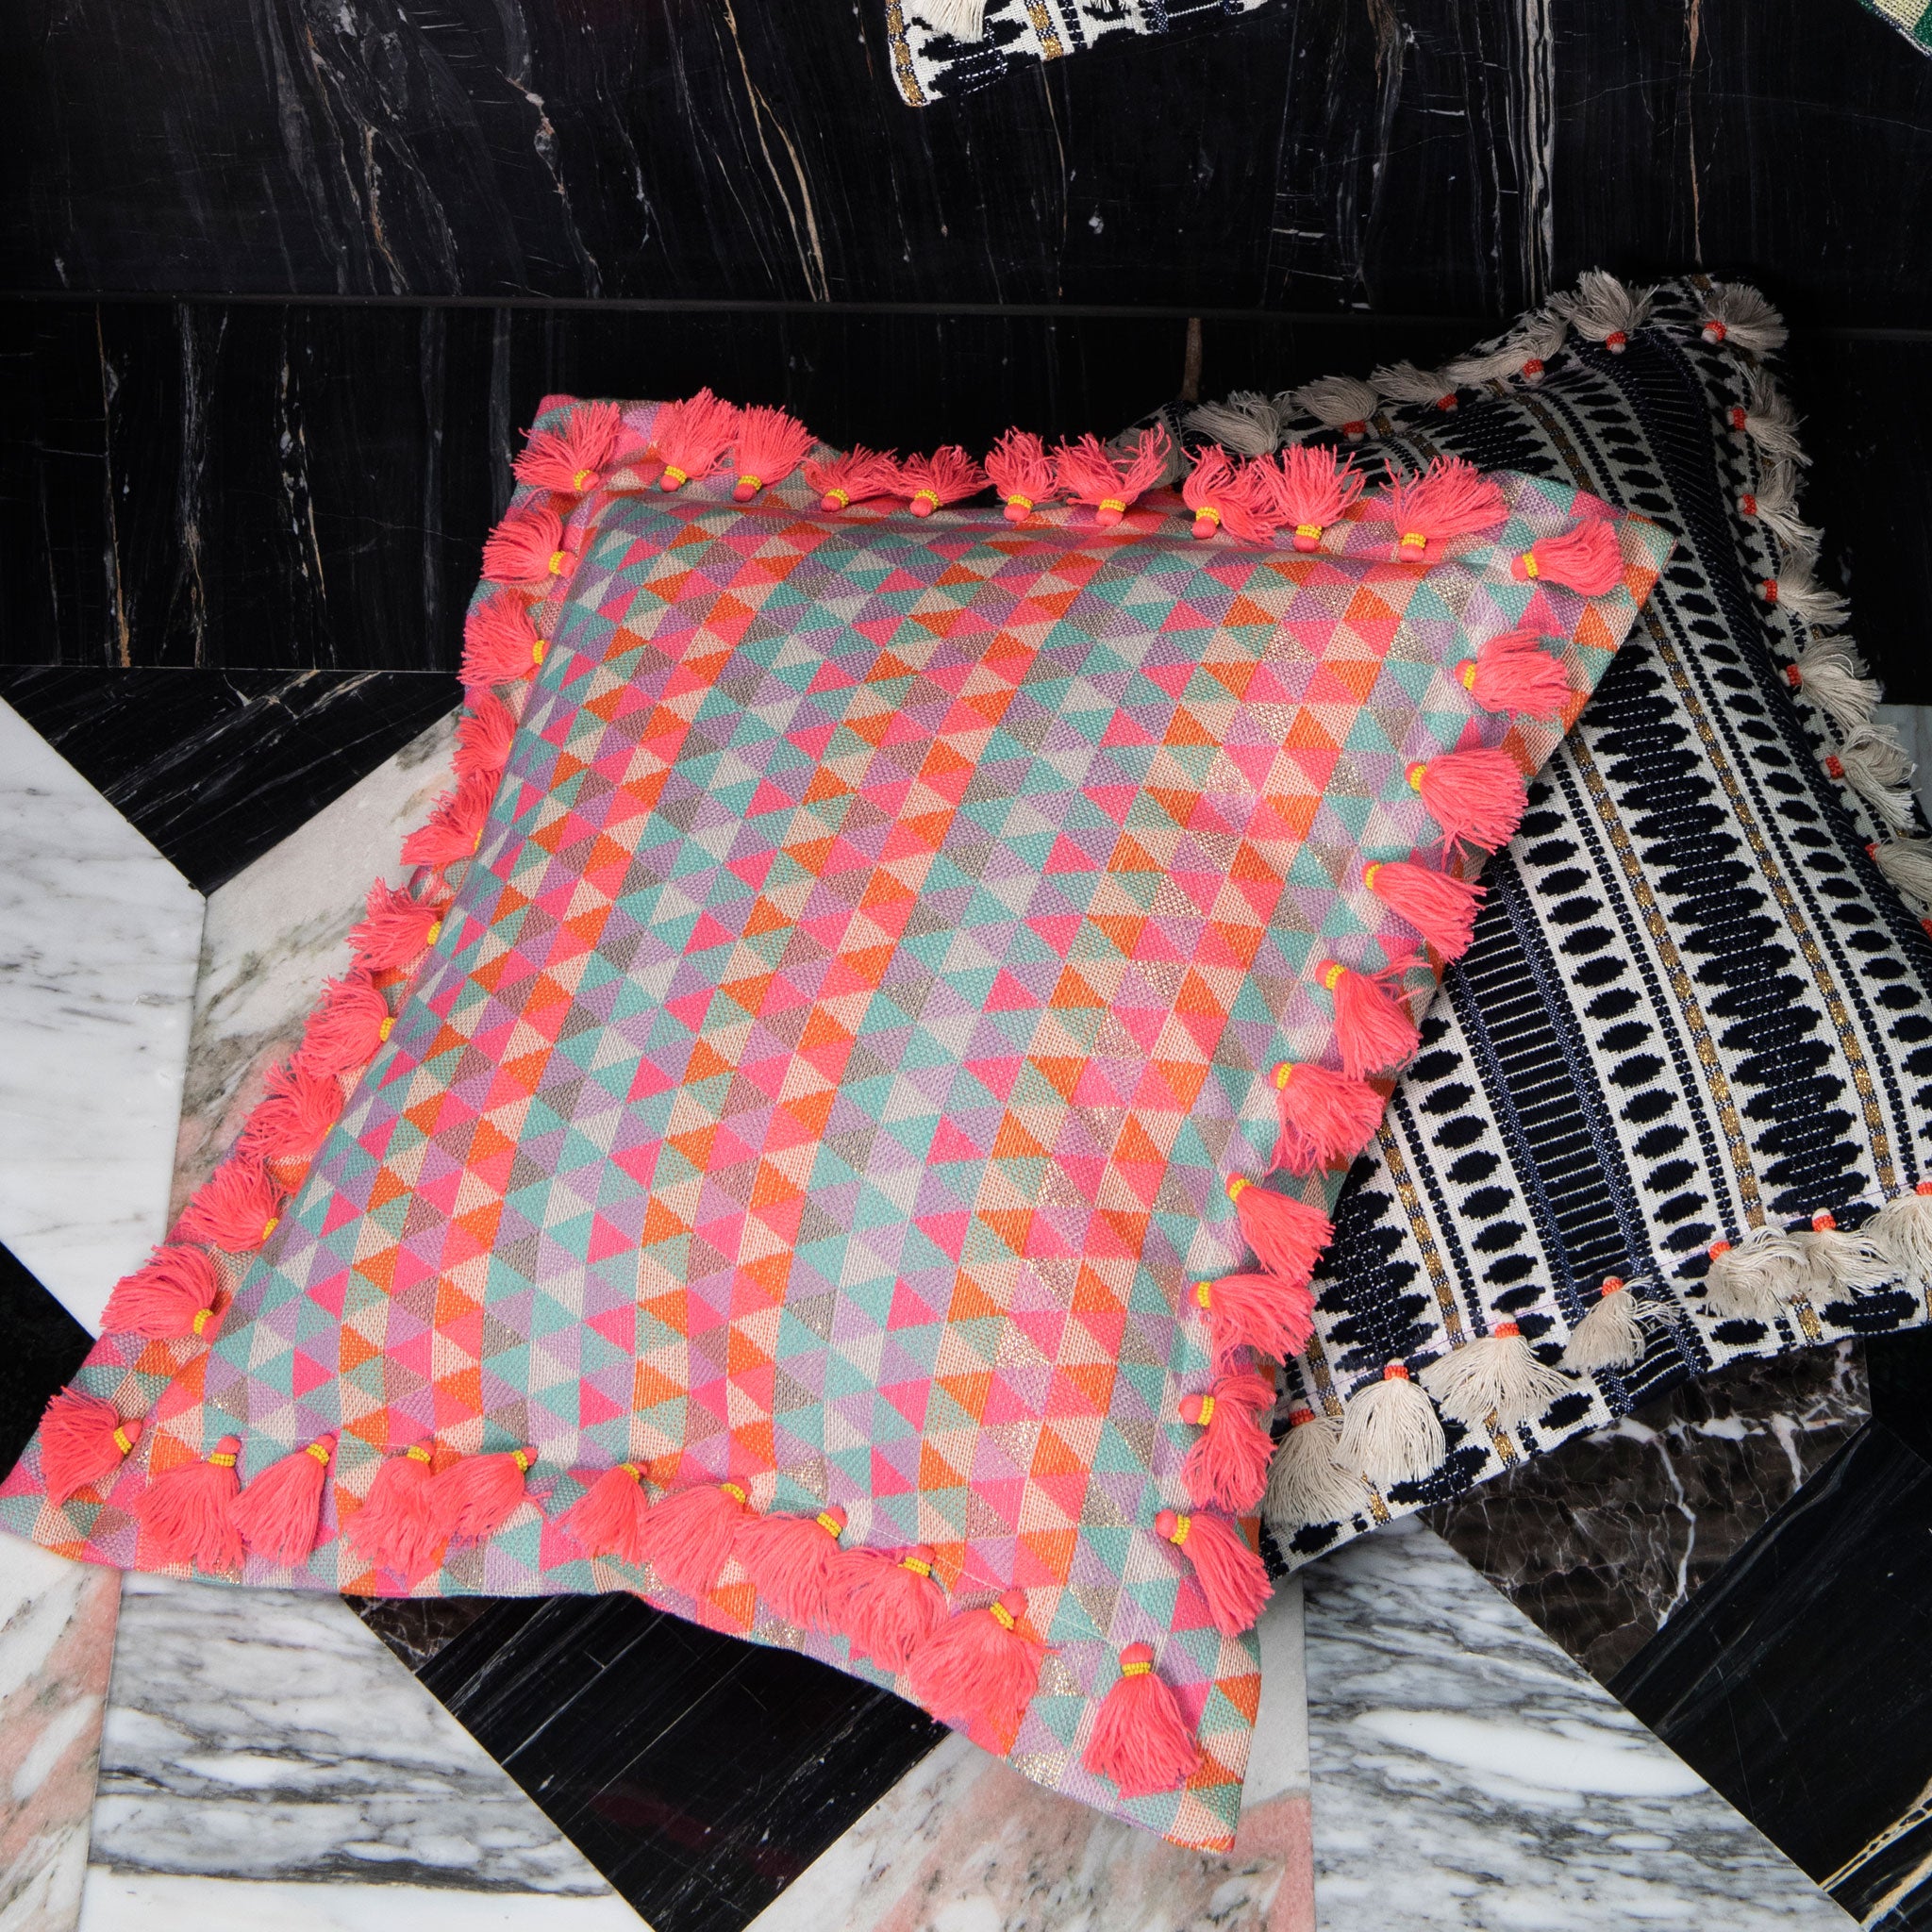 Bedawi Blush Cotton Cushion